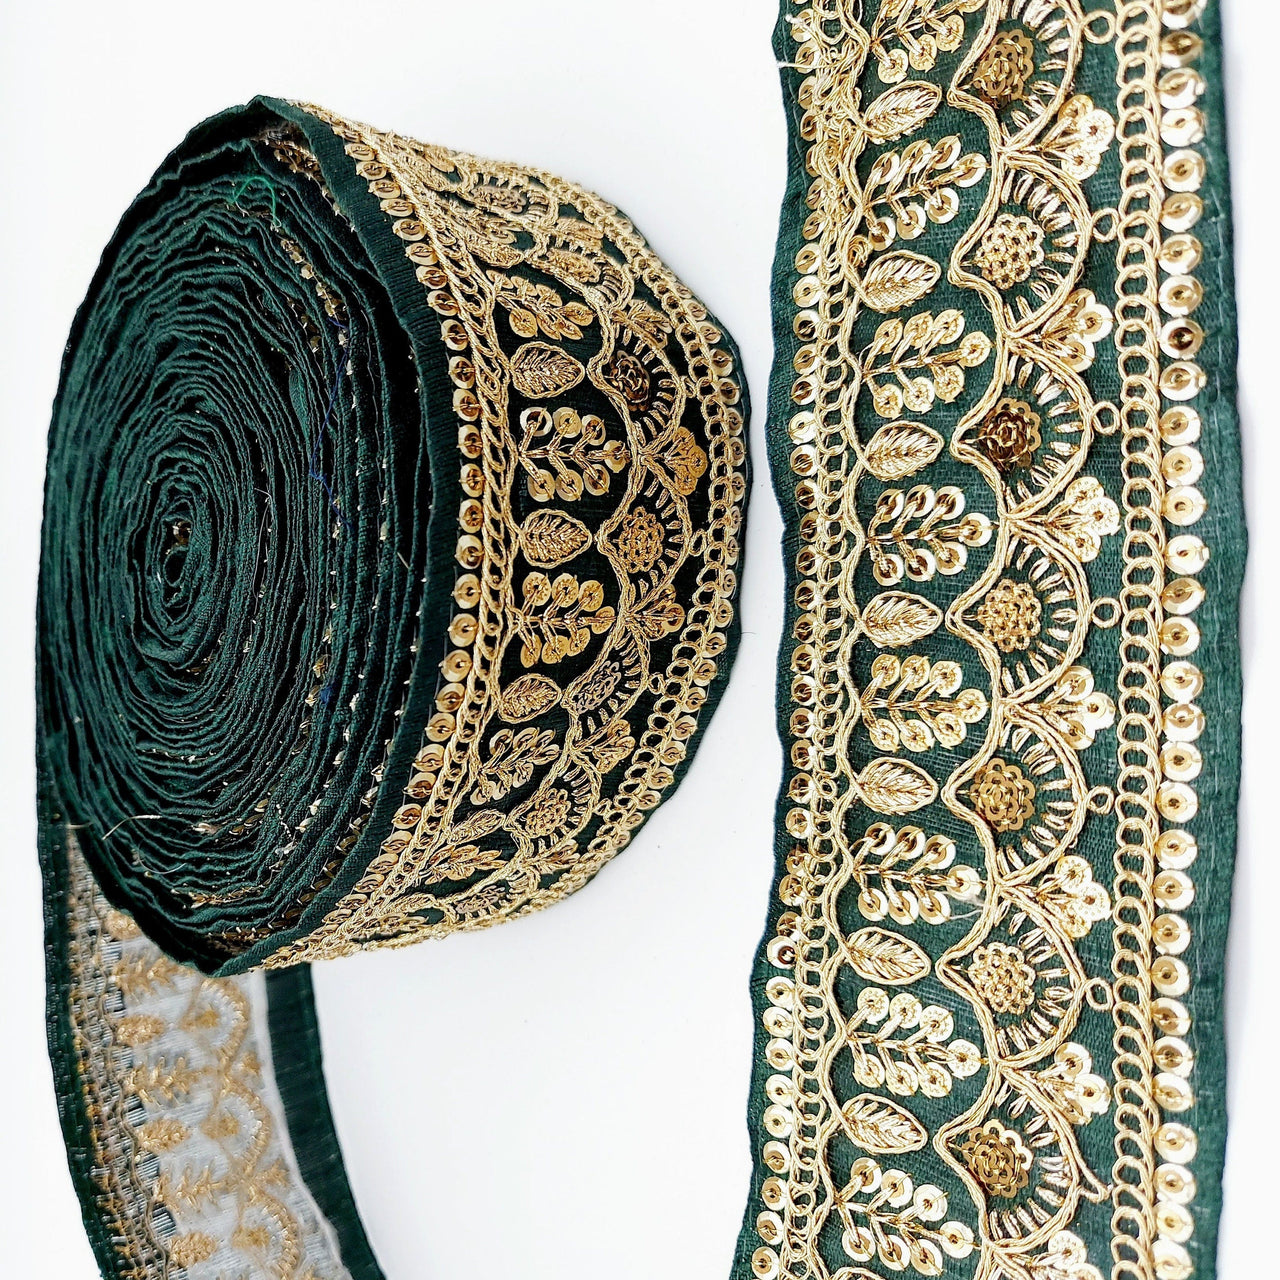 Dark Green Gold Embroidered Lace Trim Sequins Trim 9 Yard Decorative Sari Border Costume Ribbon Crafting Sewing Tape